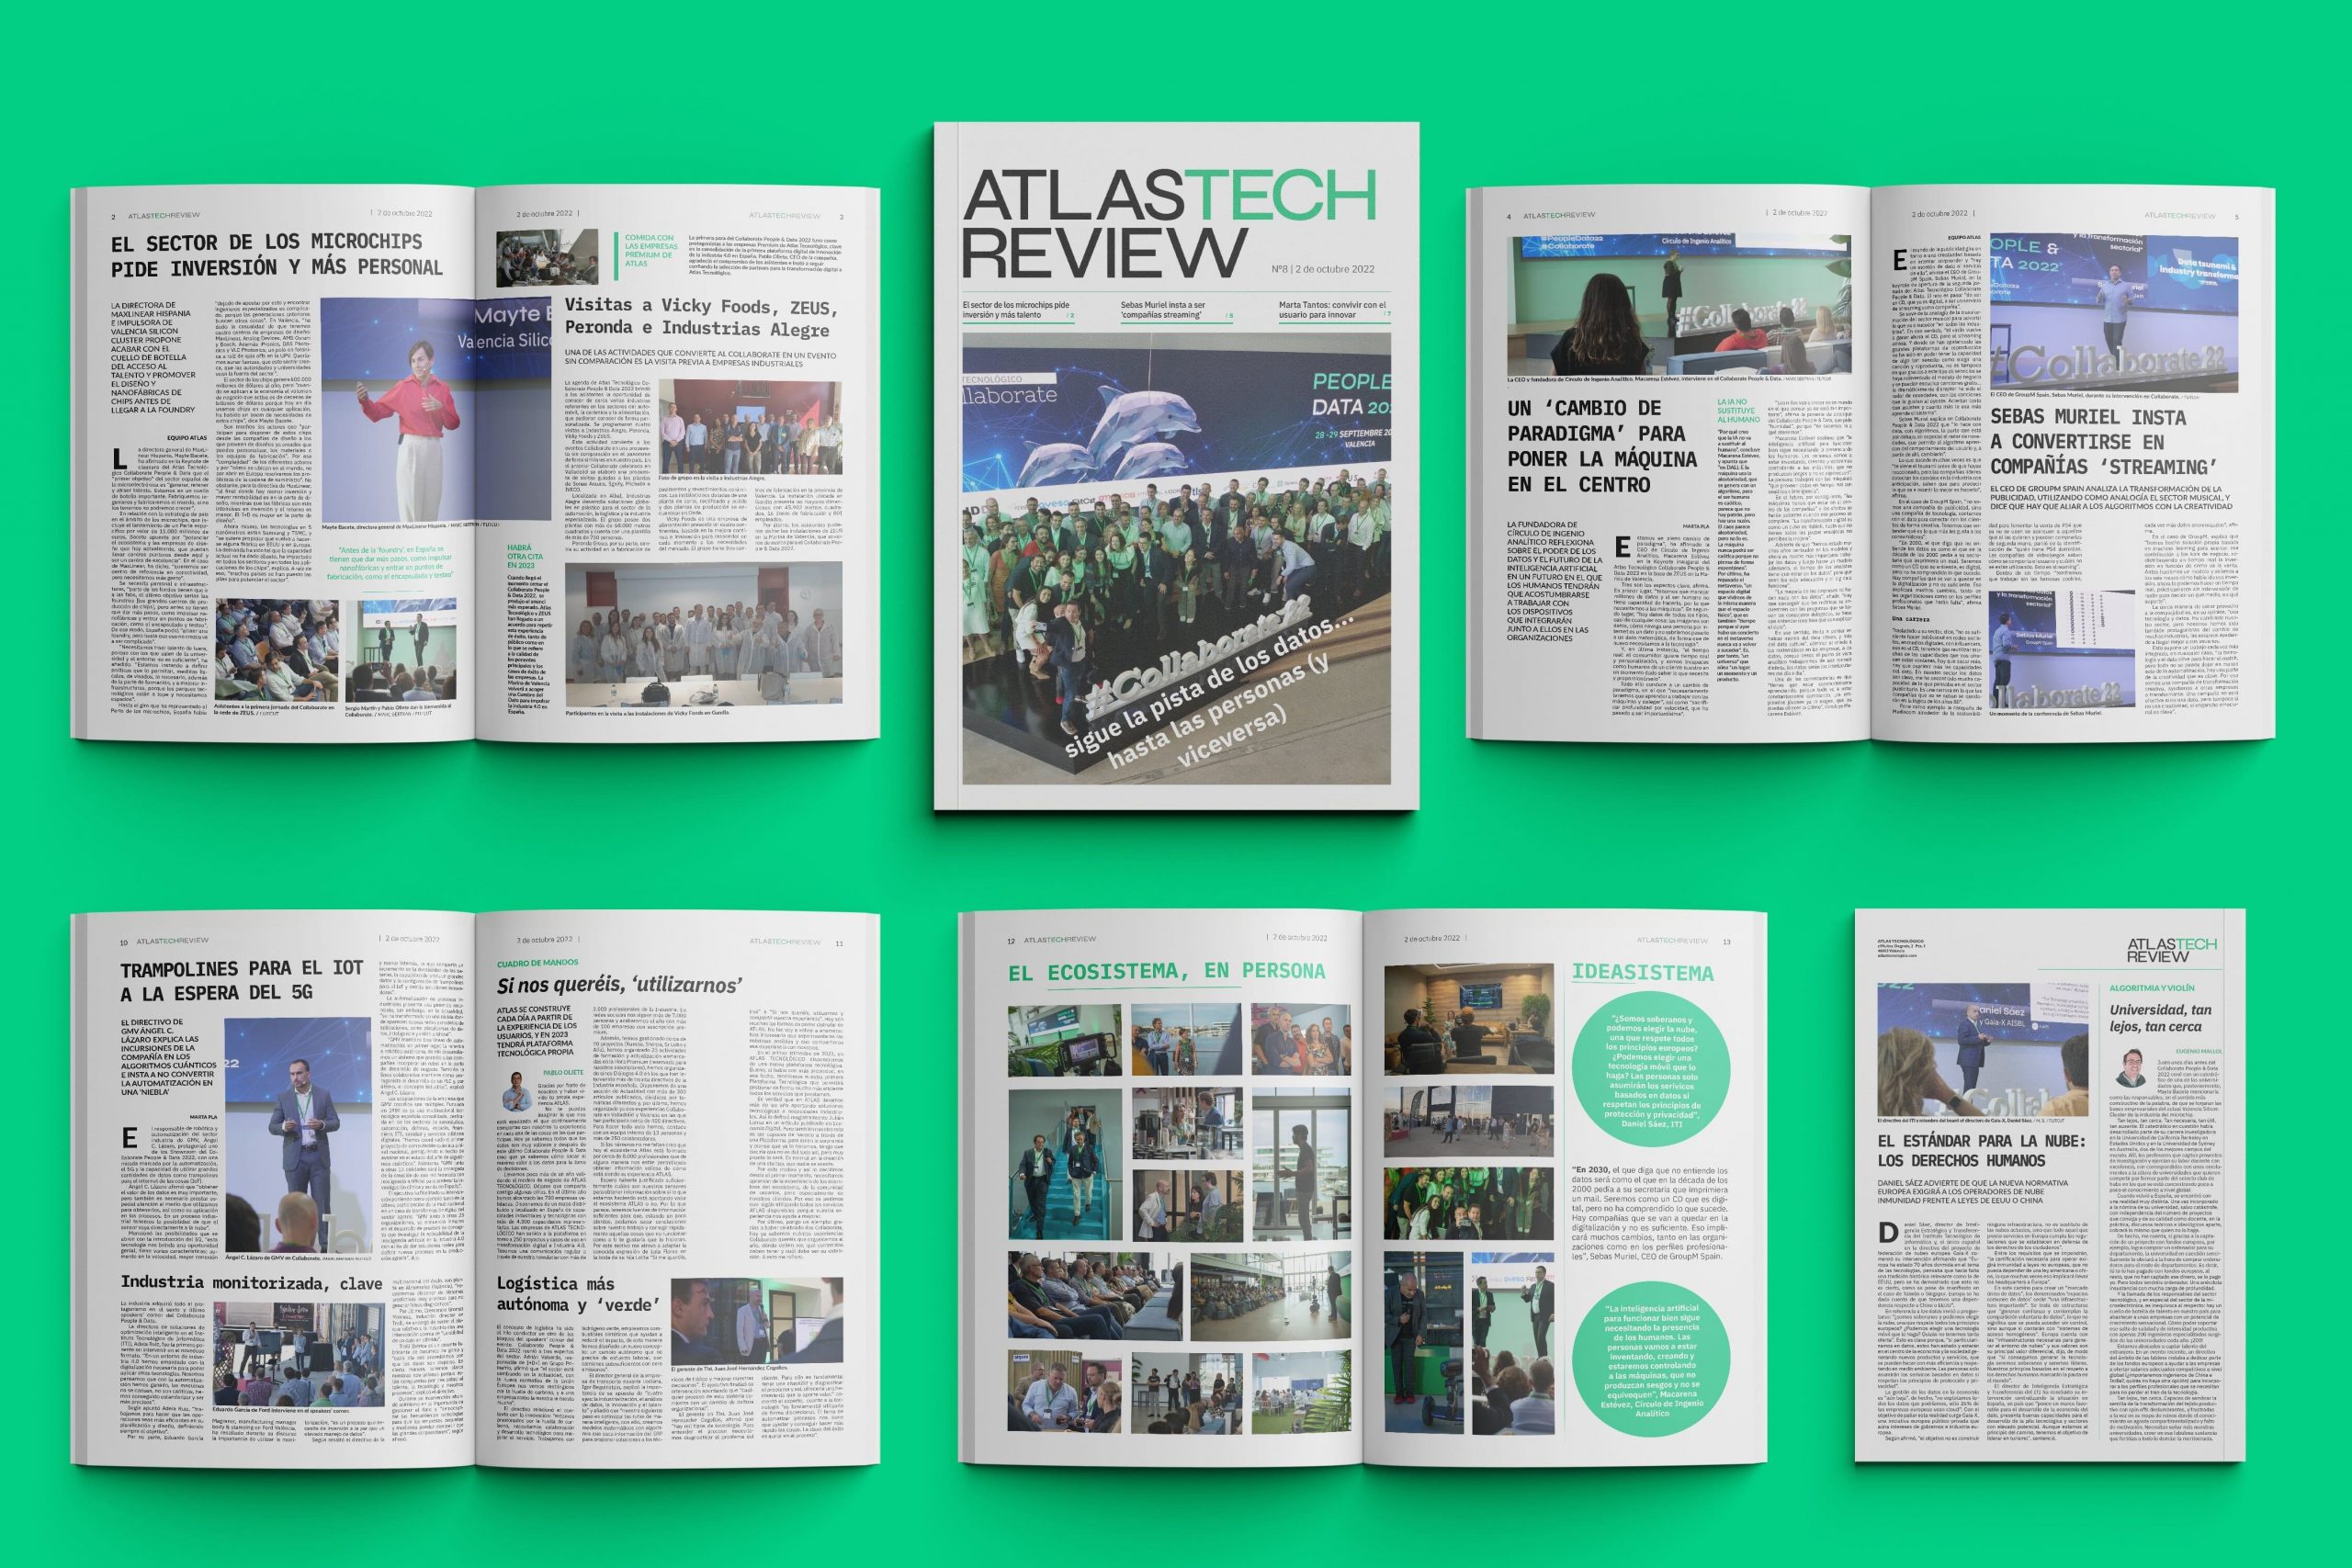 Las mejores ideas e imágenes del Collaborate People & Data, reunidas en ATLASTECH REVIEW